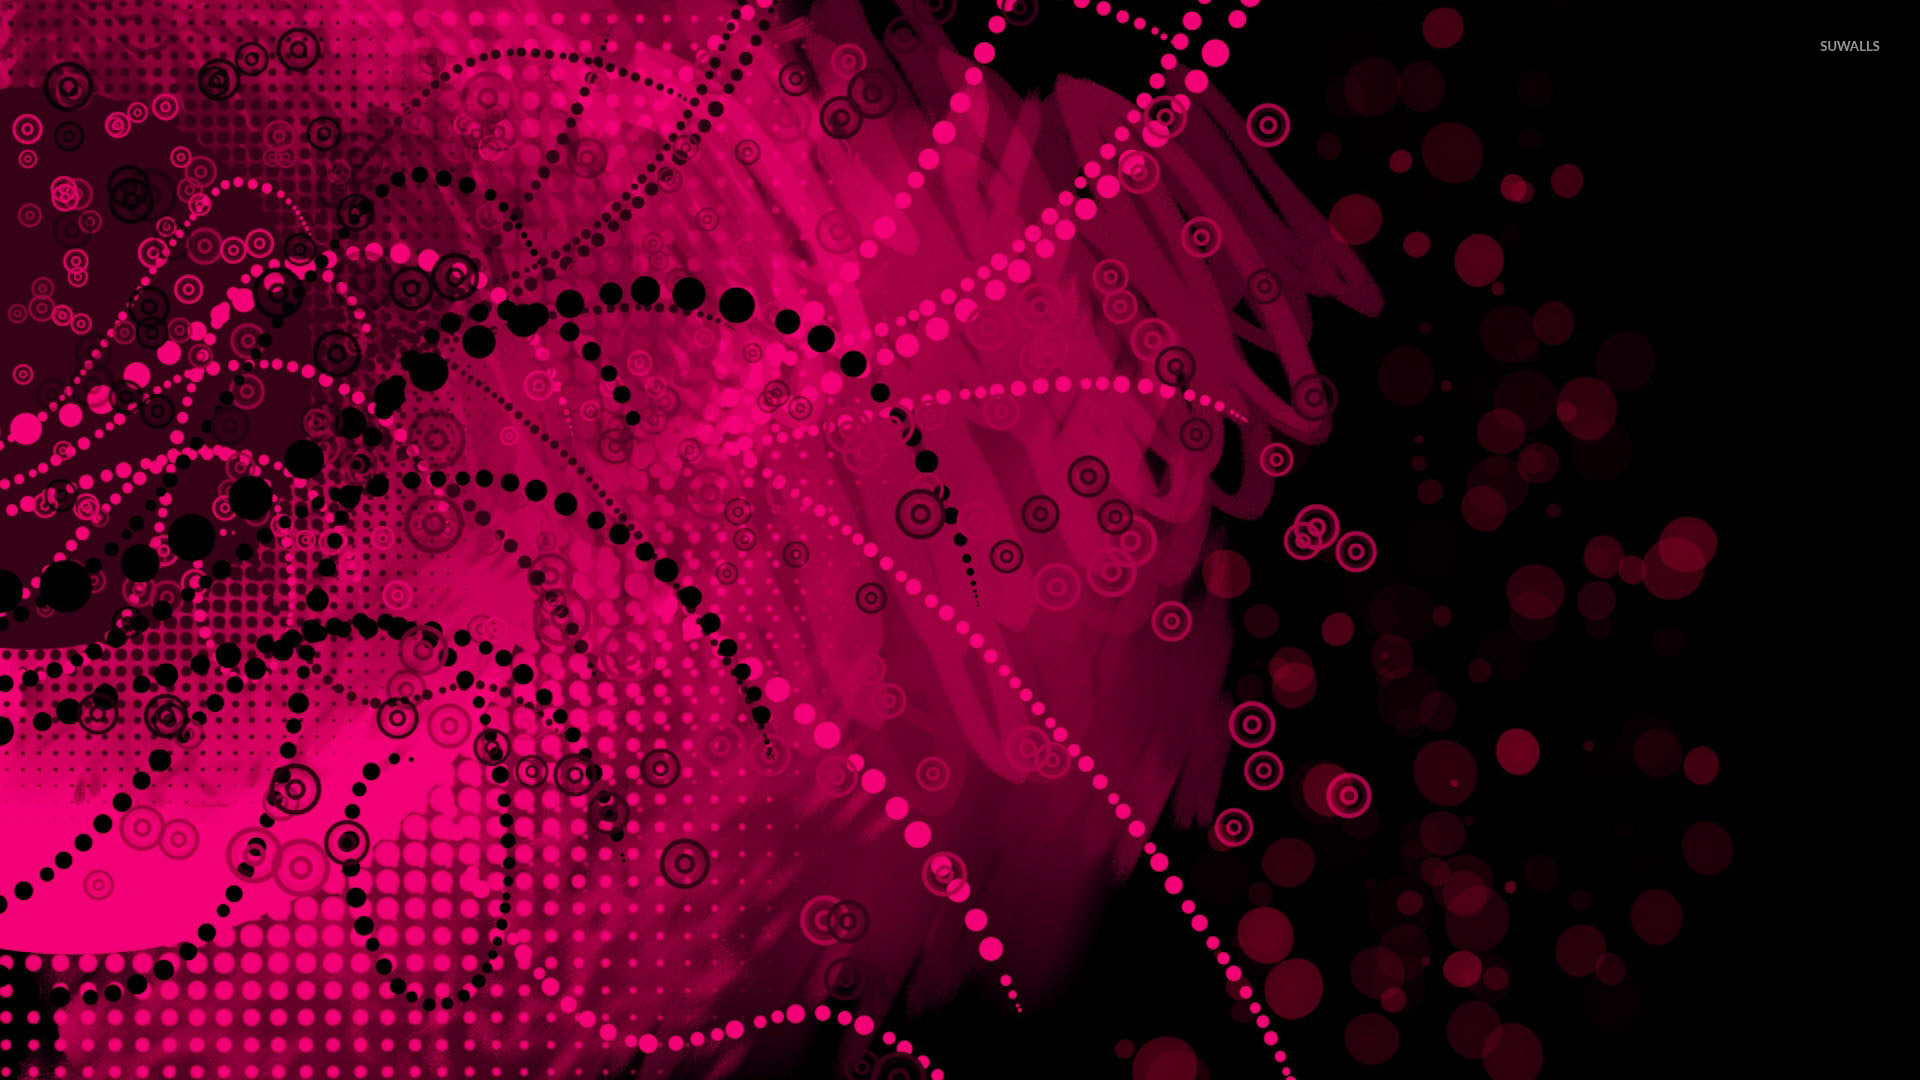 Pink dots, circles and curves wallpaper - Abstract wallpapers - #51852